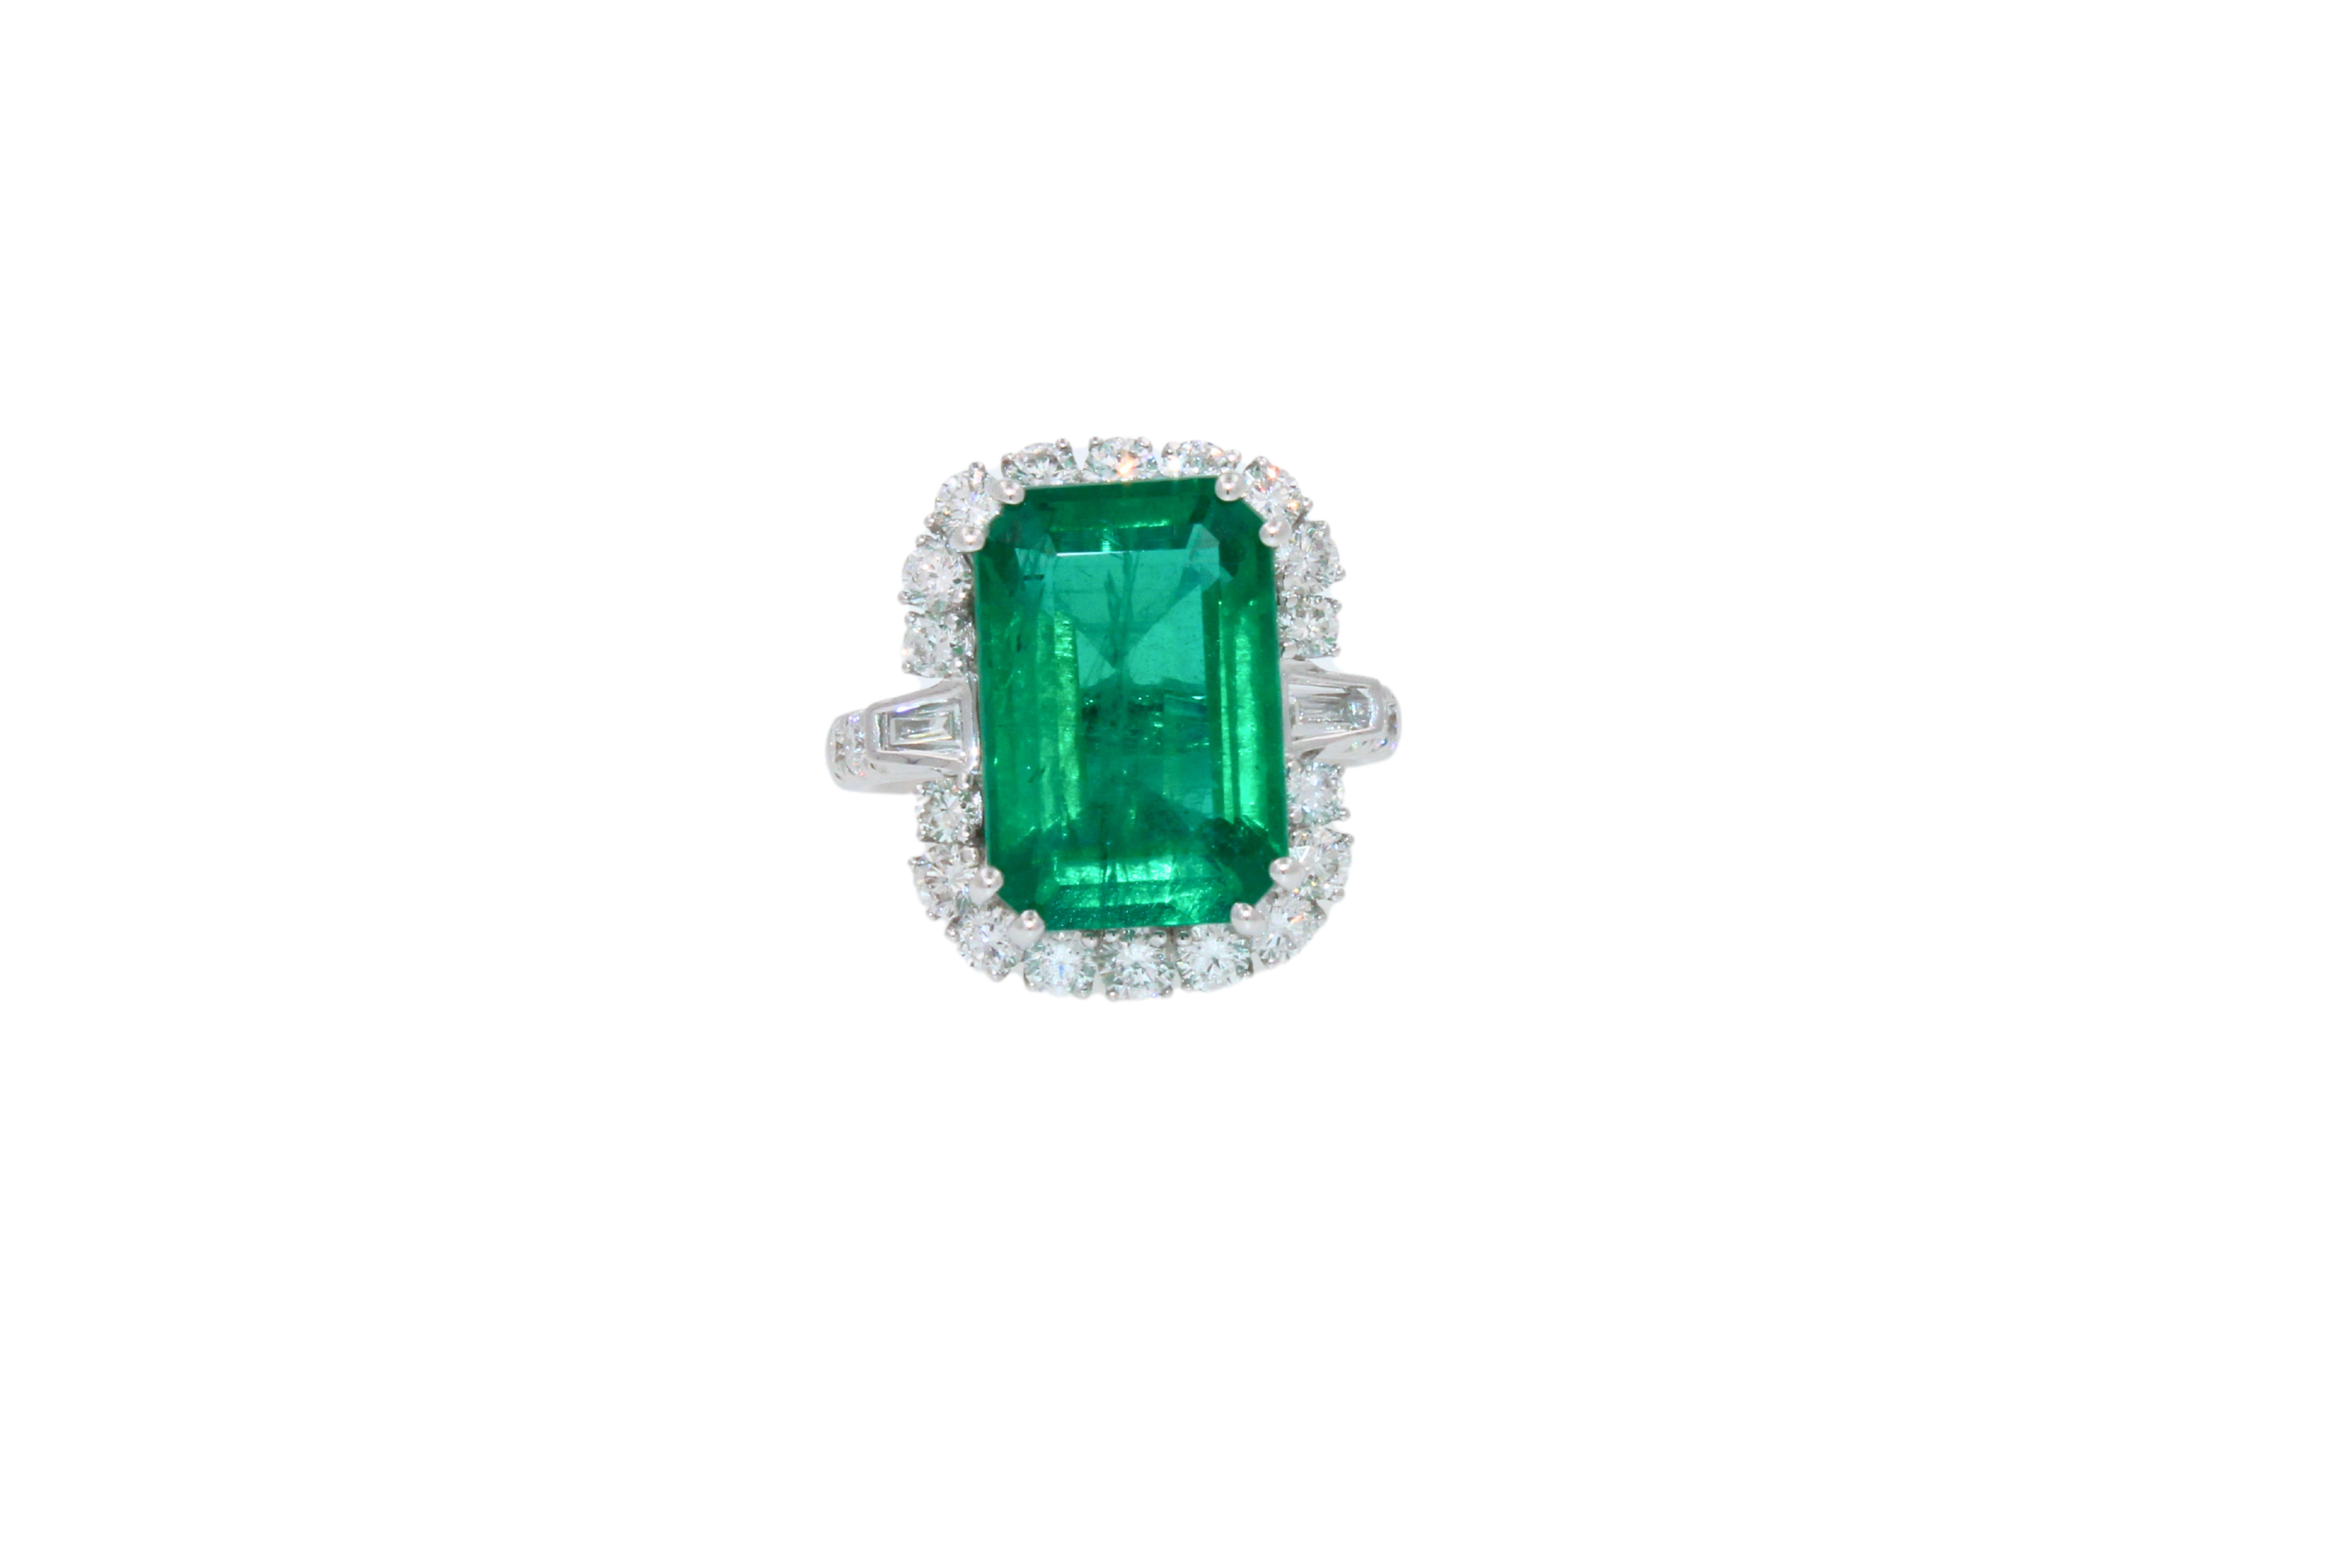 9 CT Emerald Shape, Genuine Emerald
14.62 x 8.82 mm length width ratio of center Emerald
8.75 Grams
18K White Gold
2.0 Carats of White Diamonds F/VS Quality Grades
6.25 Size